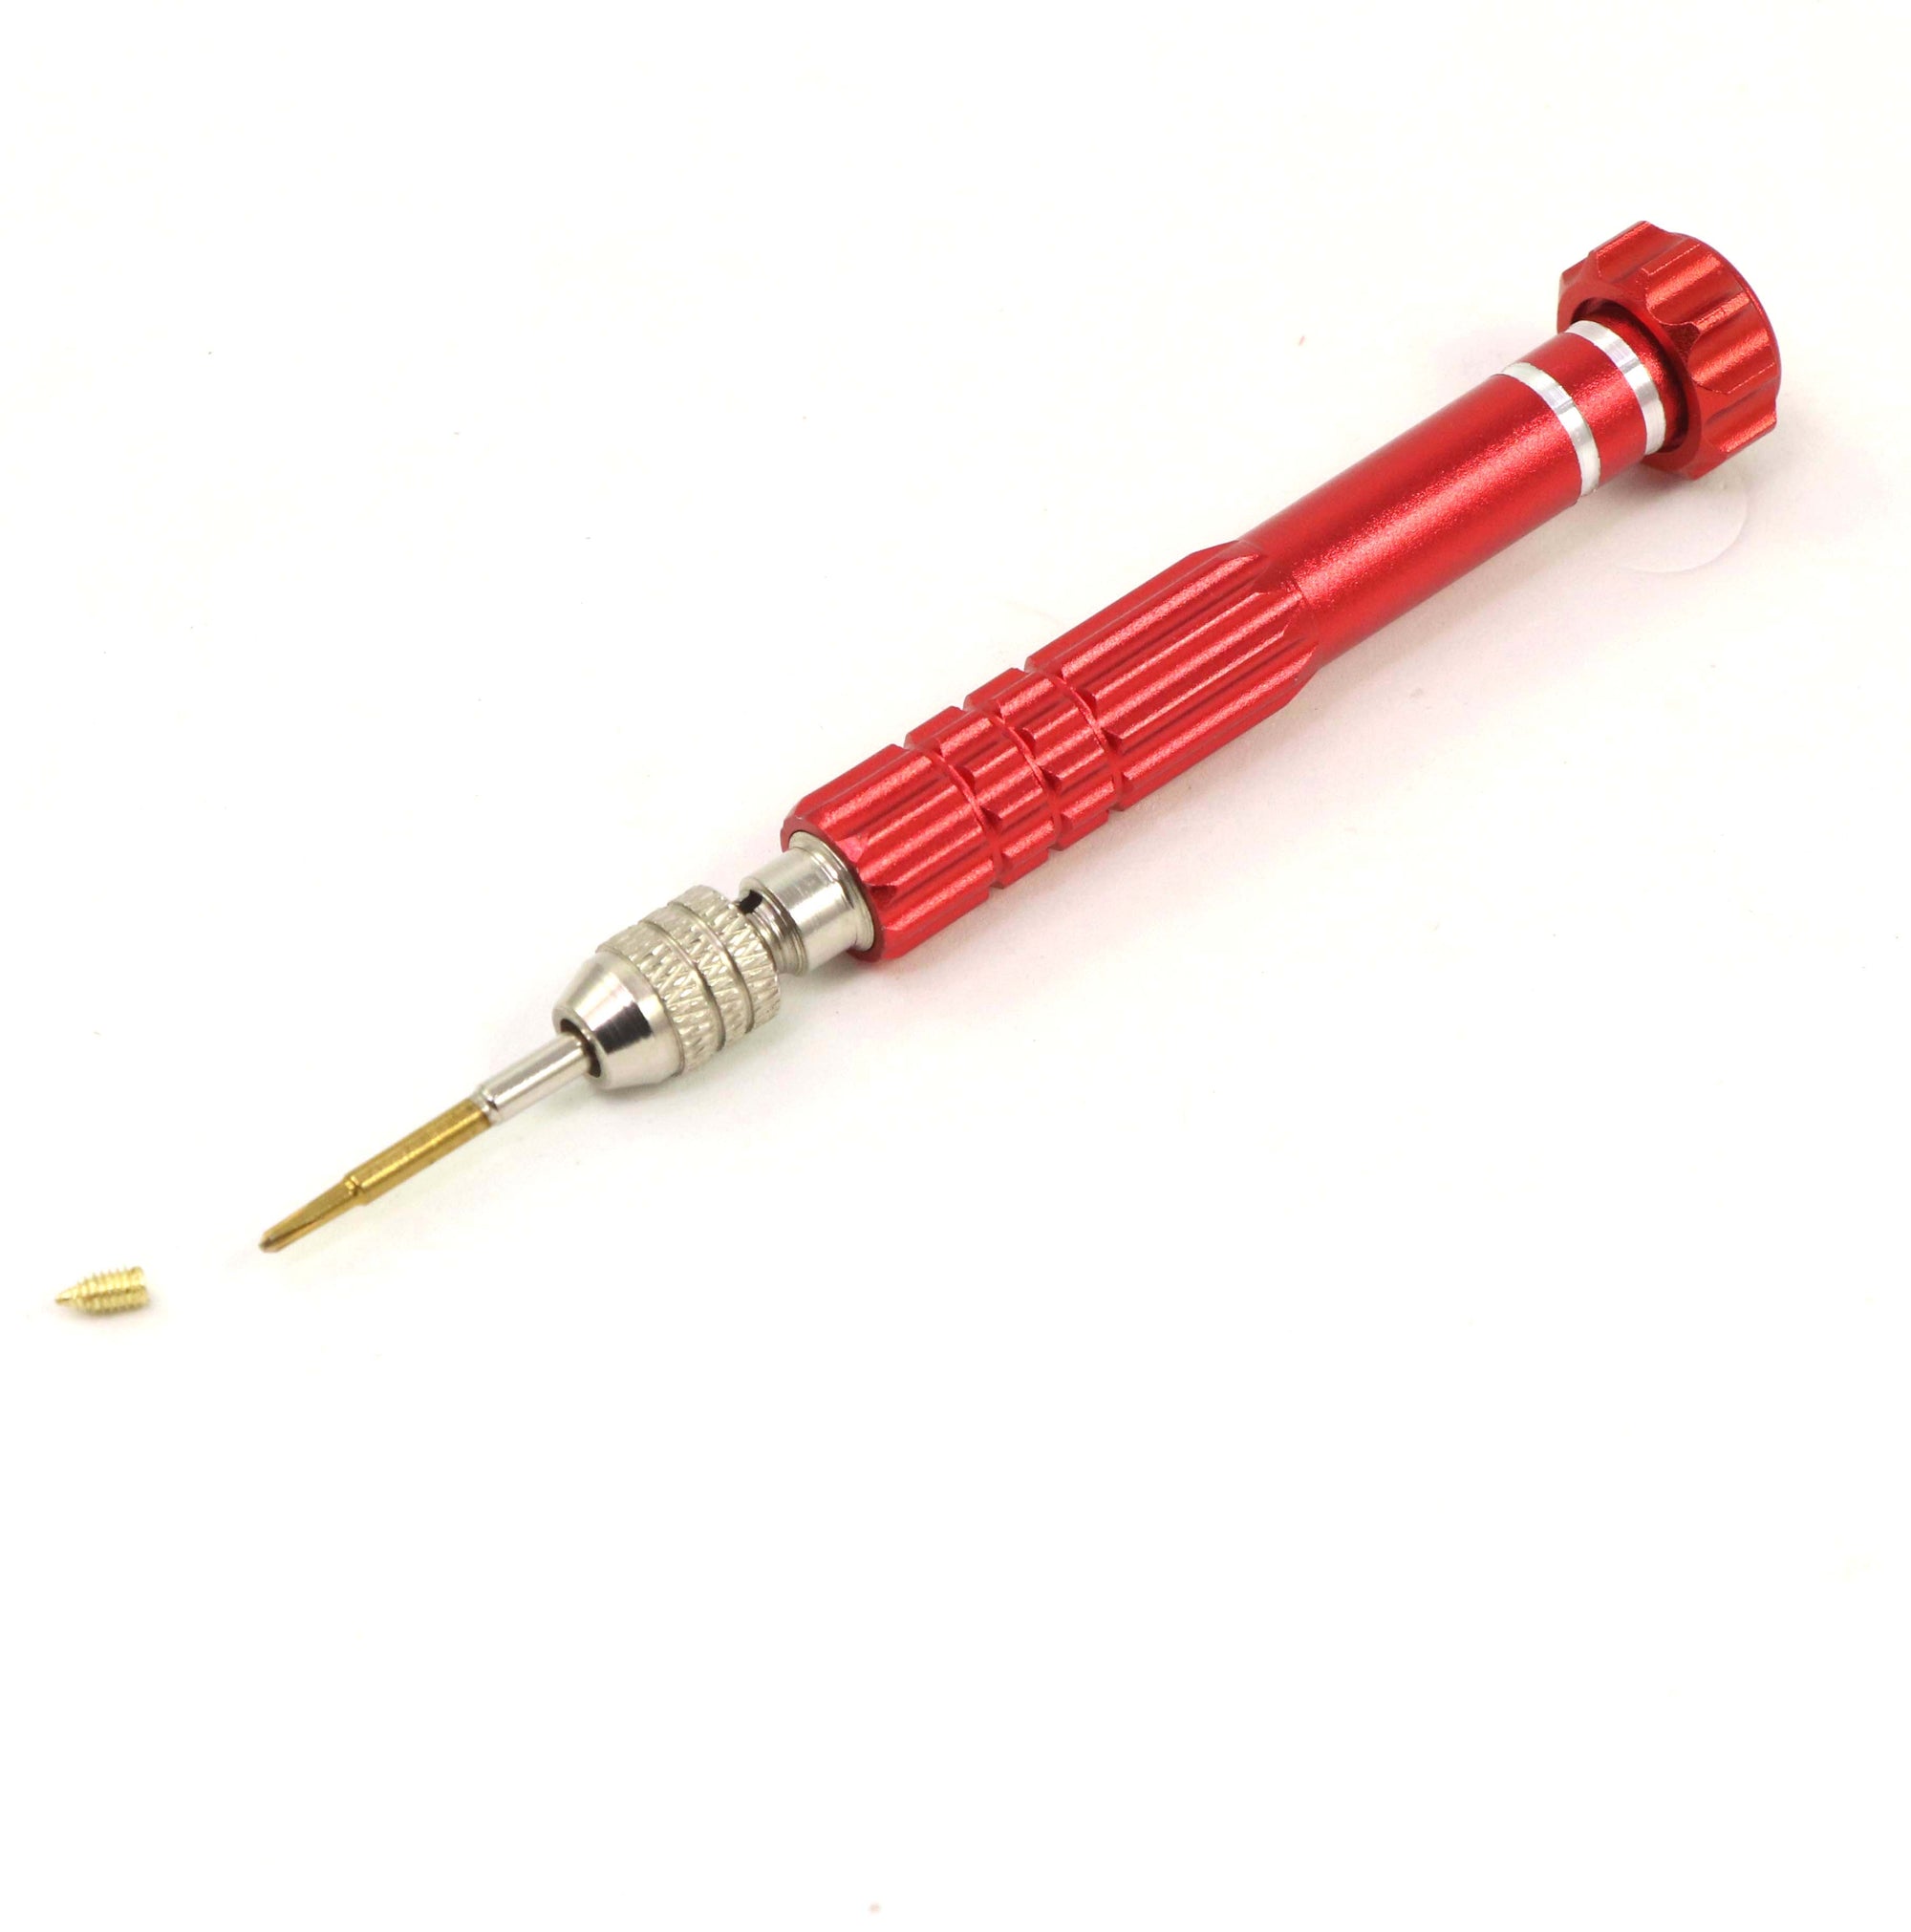 Magnetic screwdriver, small screwdriver - Colorway Arts